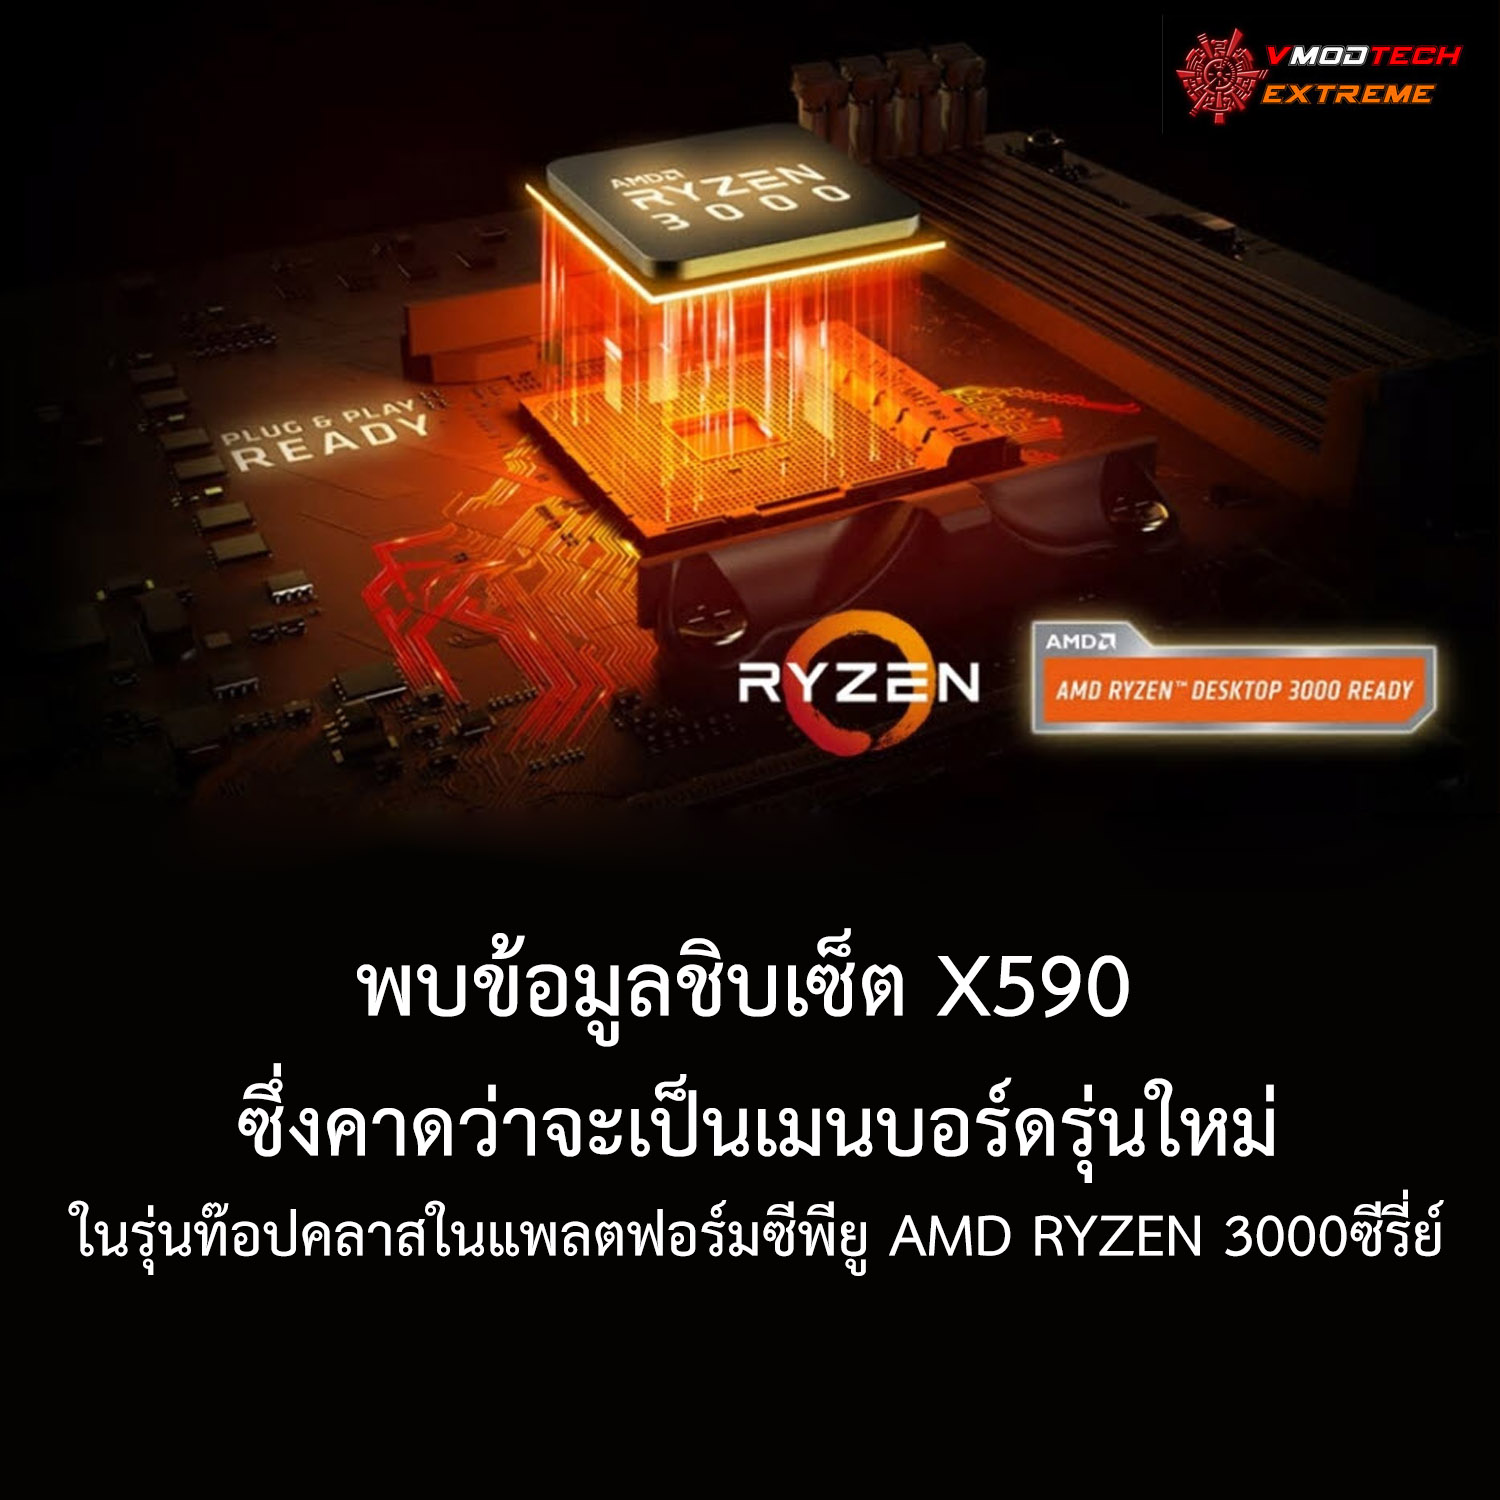 amd x5901 พบข้อมูลชิบเซ็ต X590 ซึ่งคาดว่าจะเป็นเมนบอร์ดรุ่นใหม่ในรุ่นท๊อปคลาสในแพลตฟอร์มซีพียู AMD RYZEN 3000ซีรี่ย์